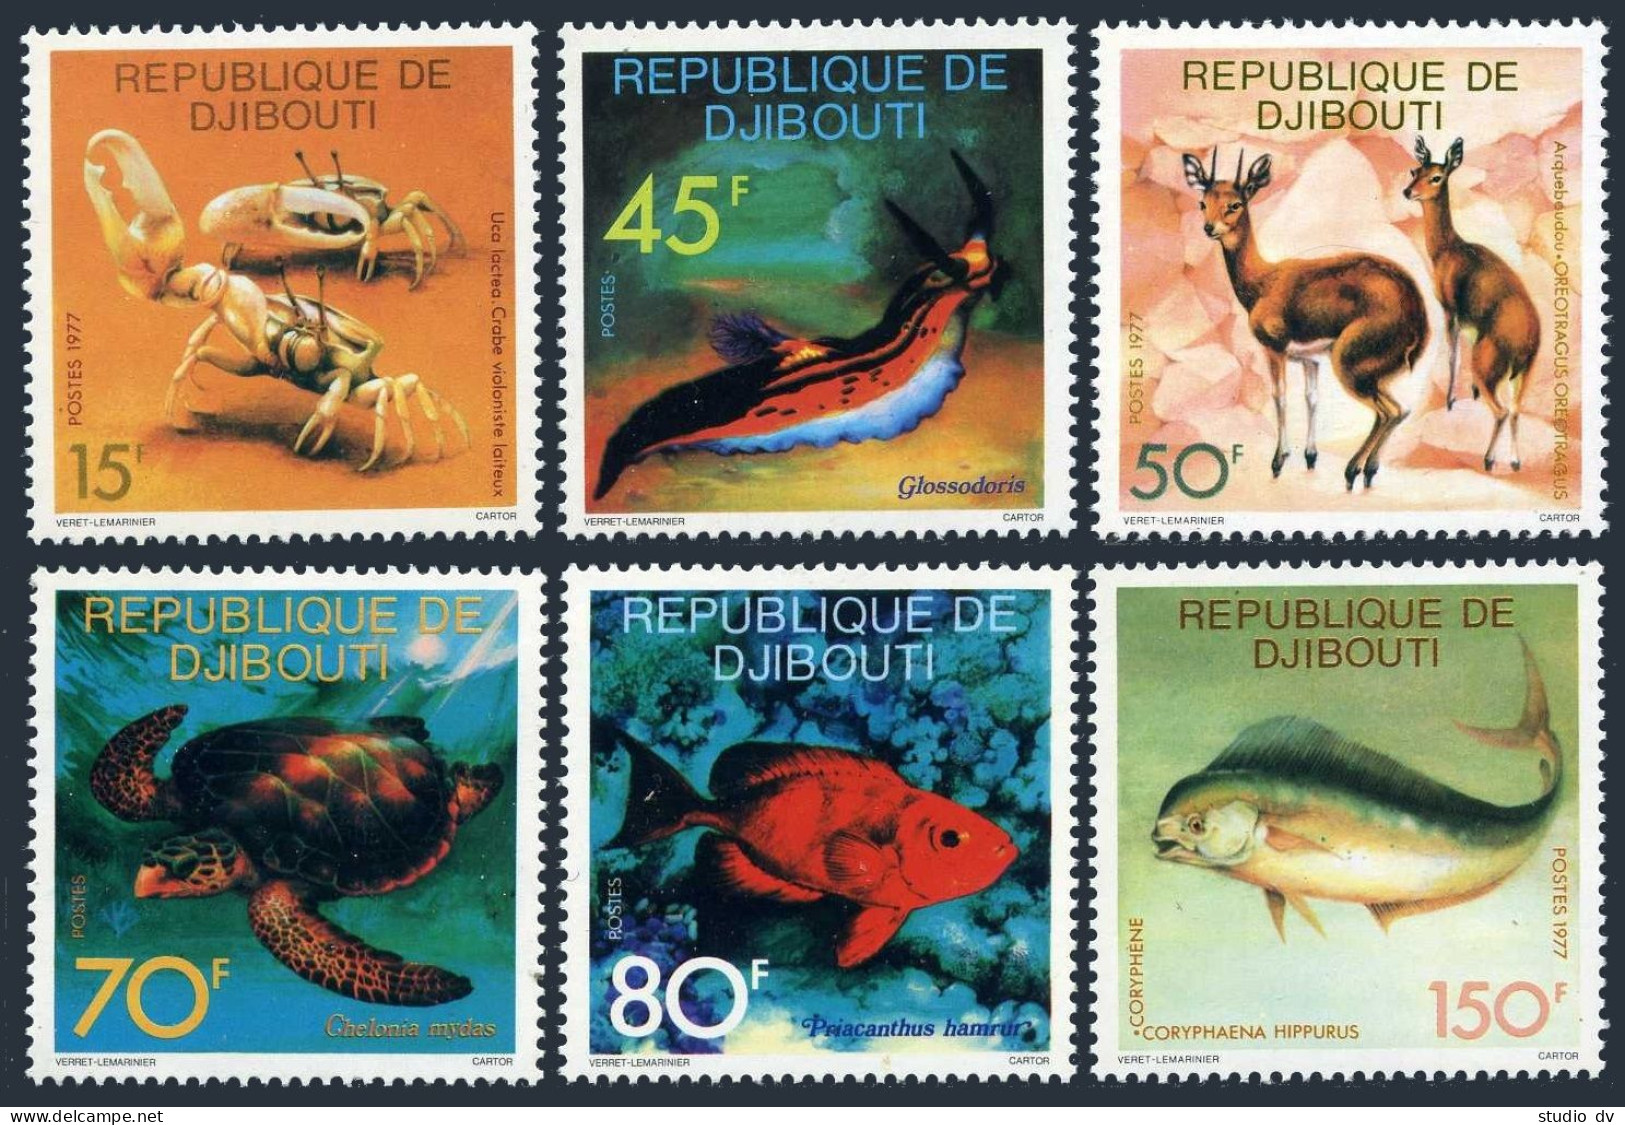 Djibouti 464-469,MNH.Mi 201-203,205-207. Marine Life 1977.Crab,Fish,Snail,Turtle - Djibouti (1977-...)